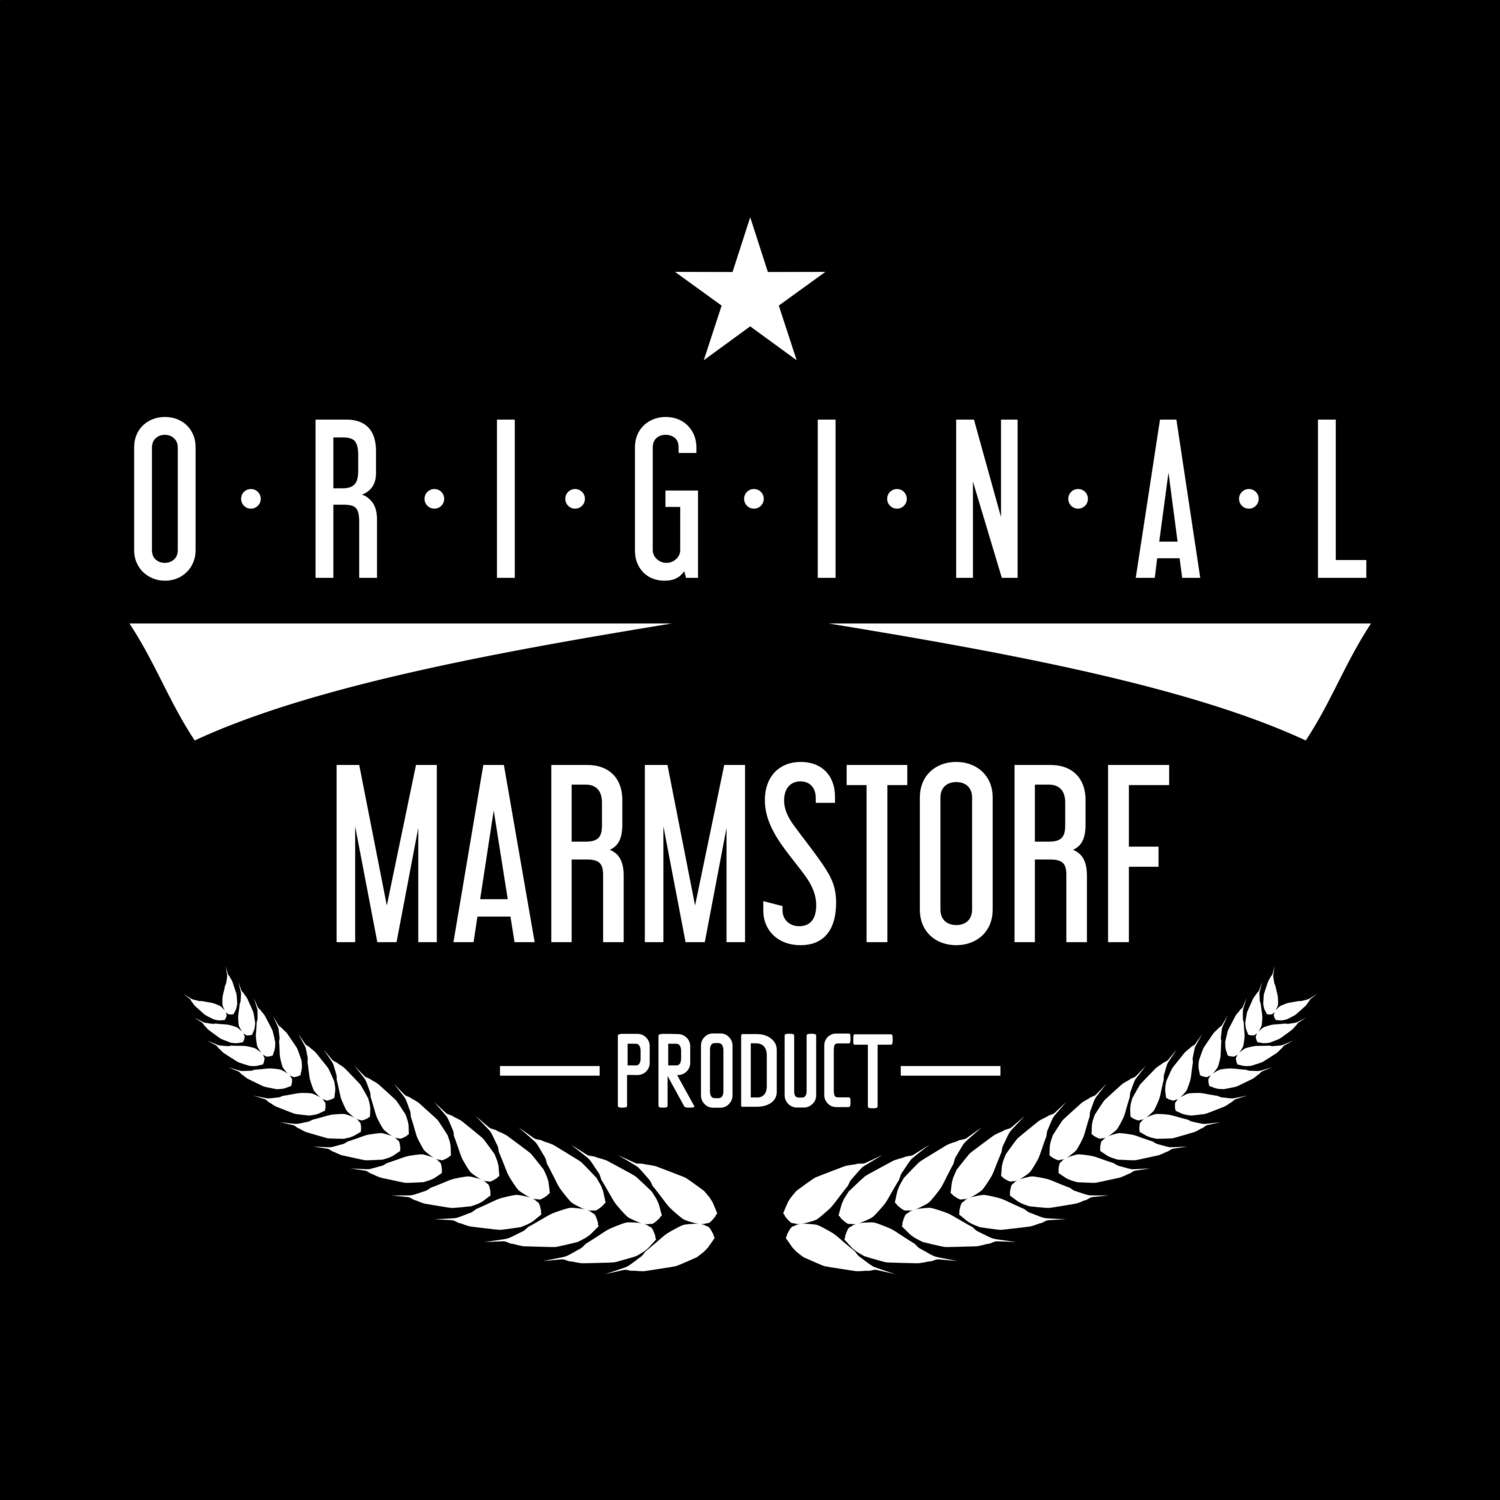 Marmstorf T-Shirt »Original Product«